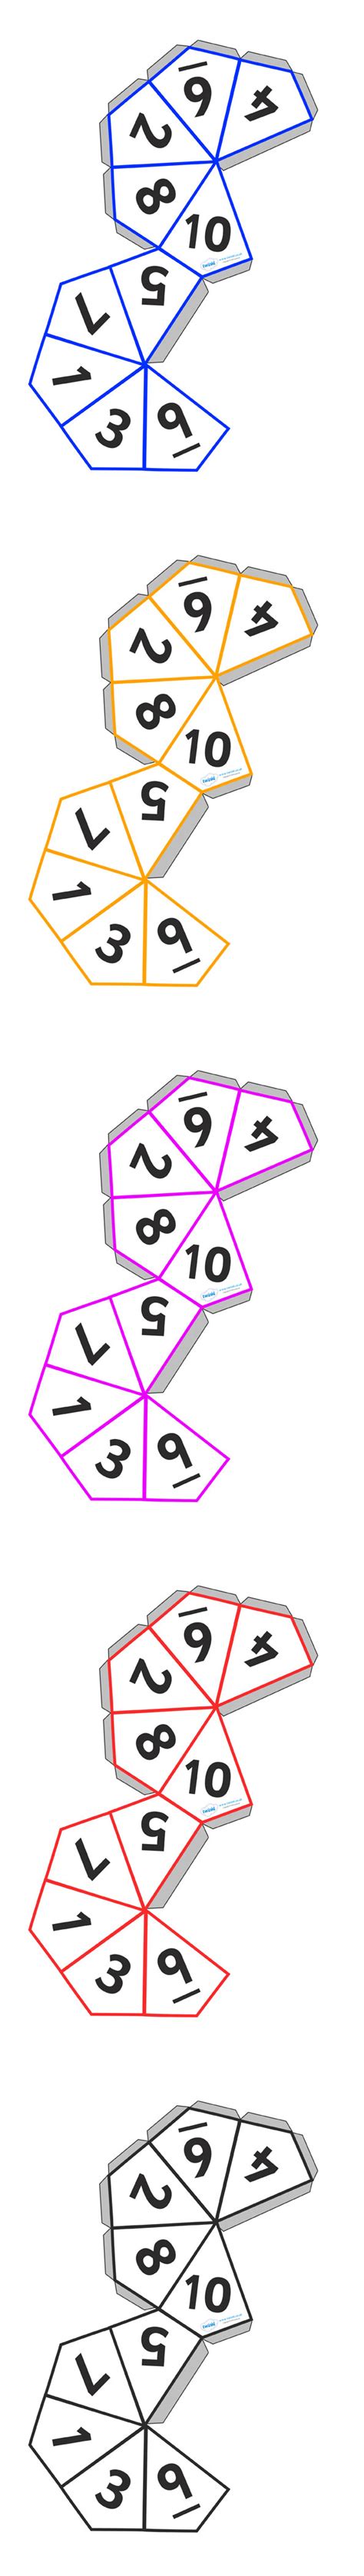 dice templates   pop    site  wwwtwinklcouk